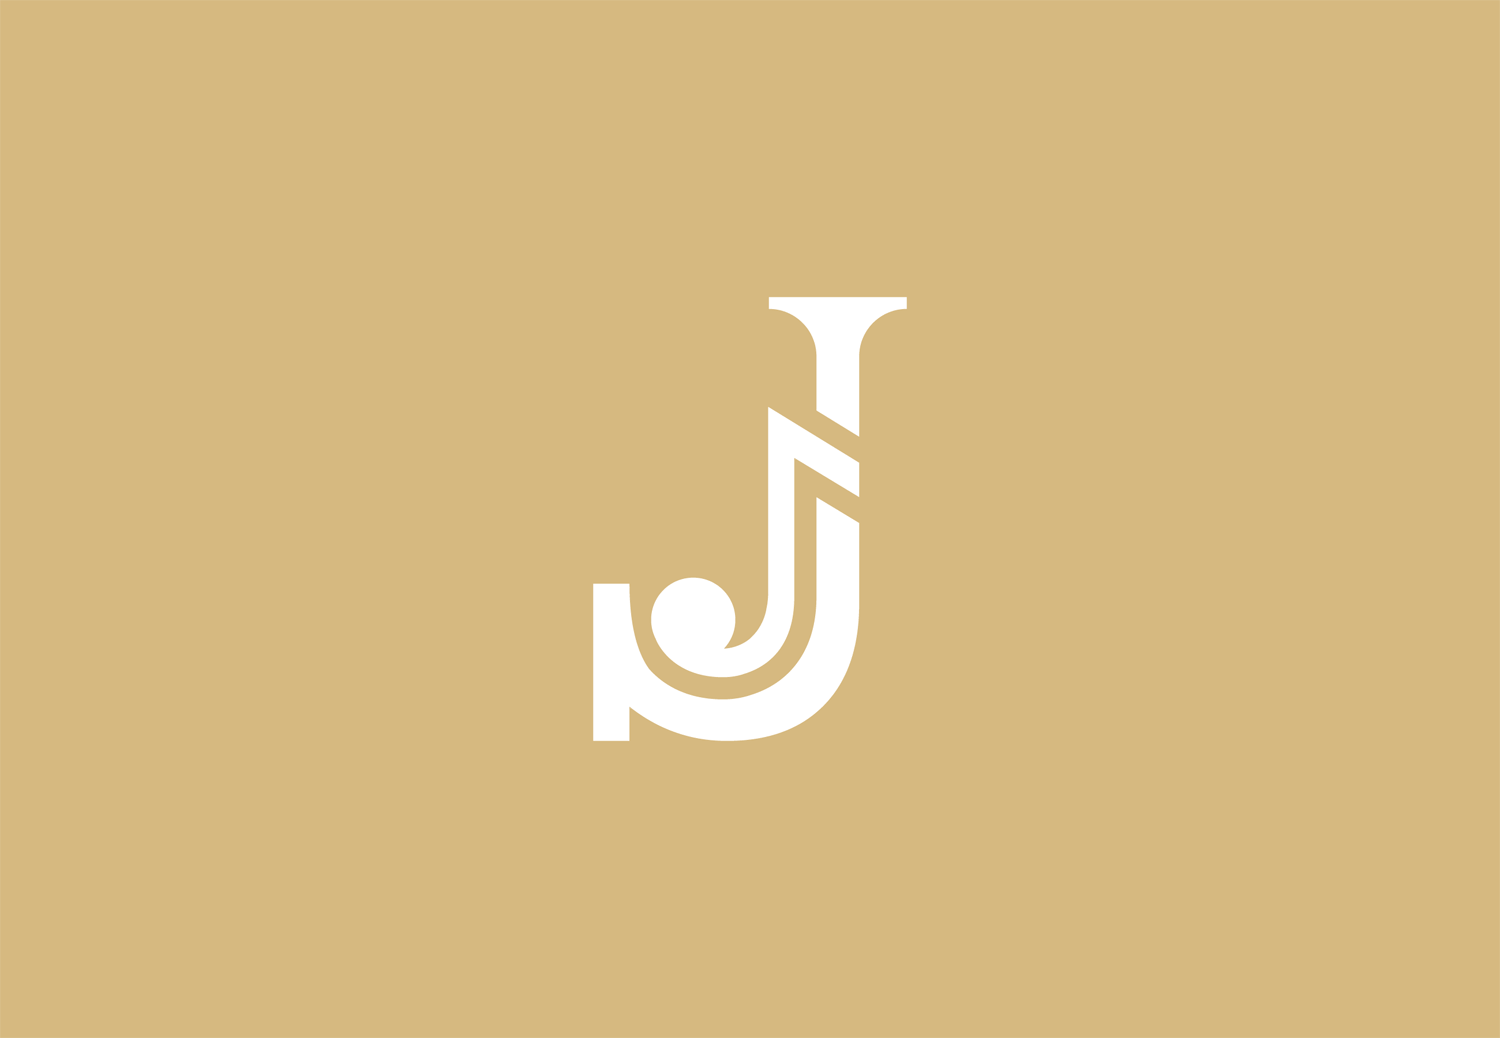 logo J monogram met muzieknoot - muzikaal logo ontwerp